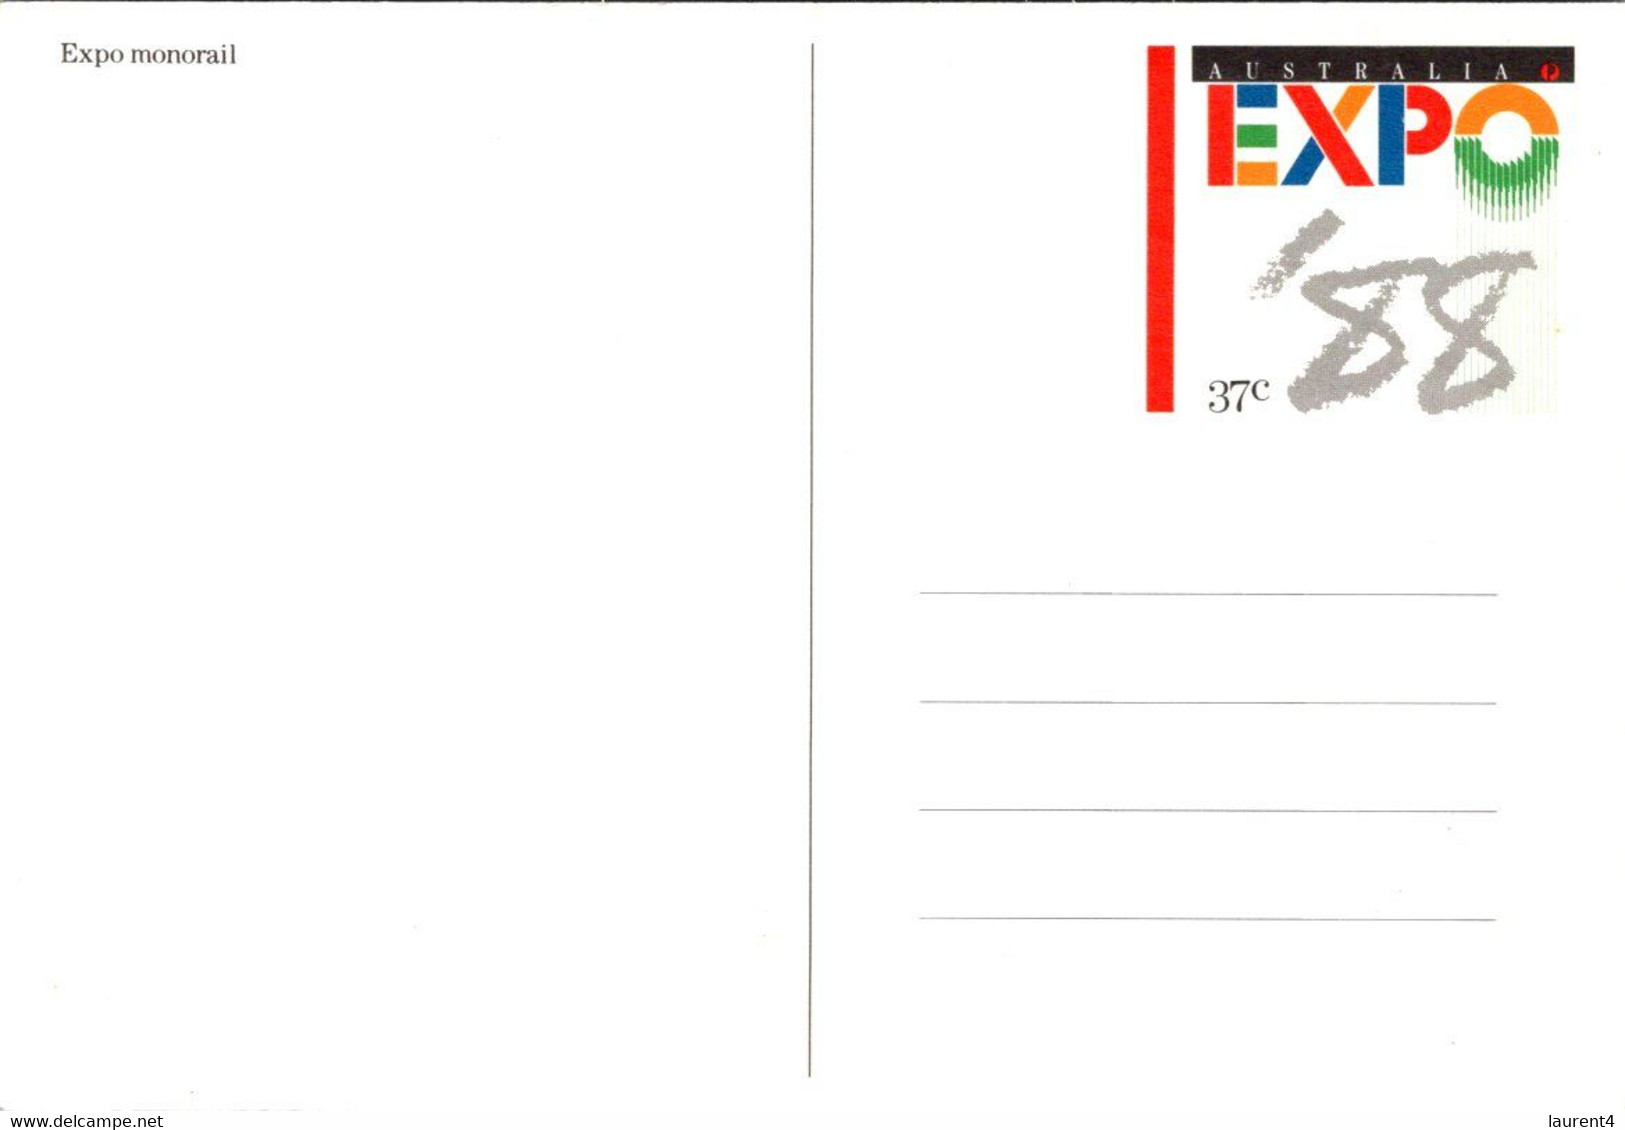 (1 G 32) Australia - Expo 88 (5 fish postcards + 1 monorail)